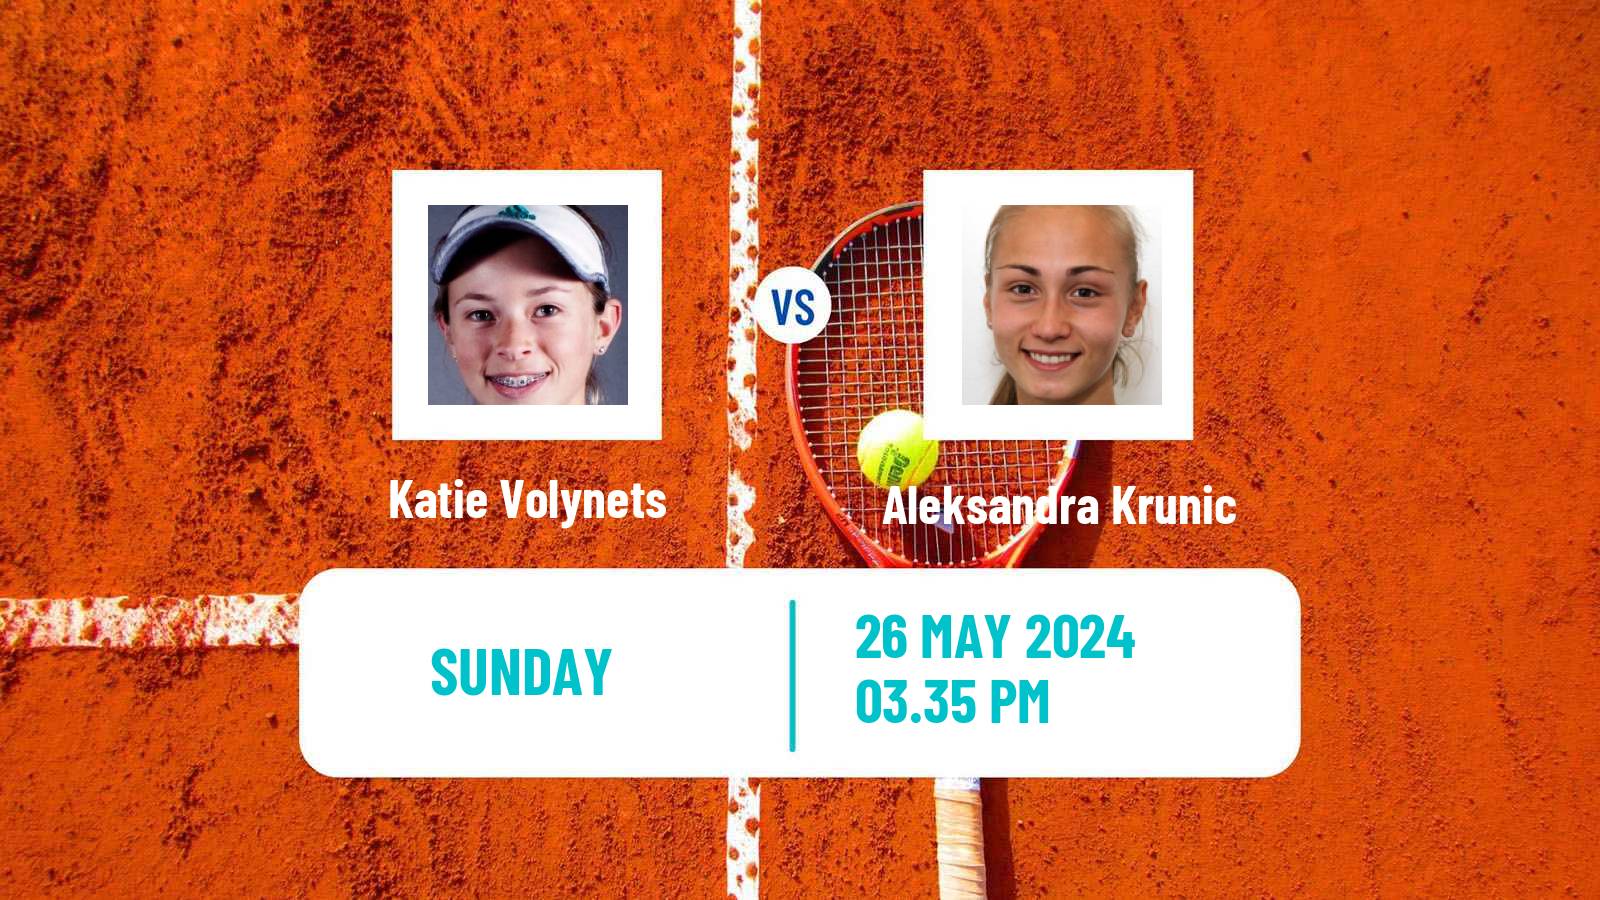 Tennis WTA Roland Garros Katie Volynets - Aleksandra Krunic